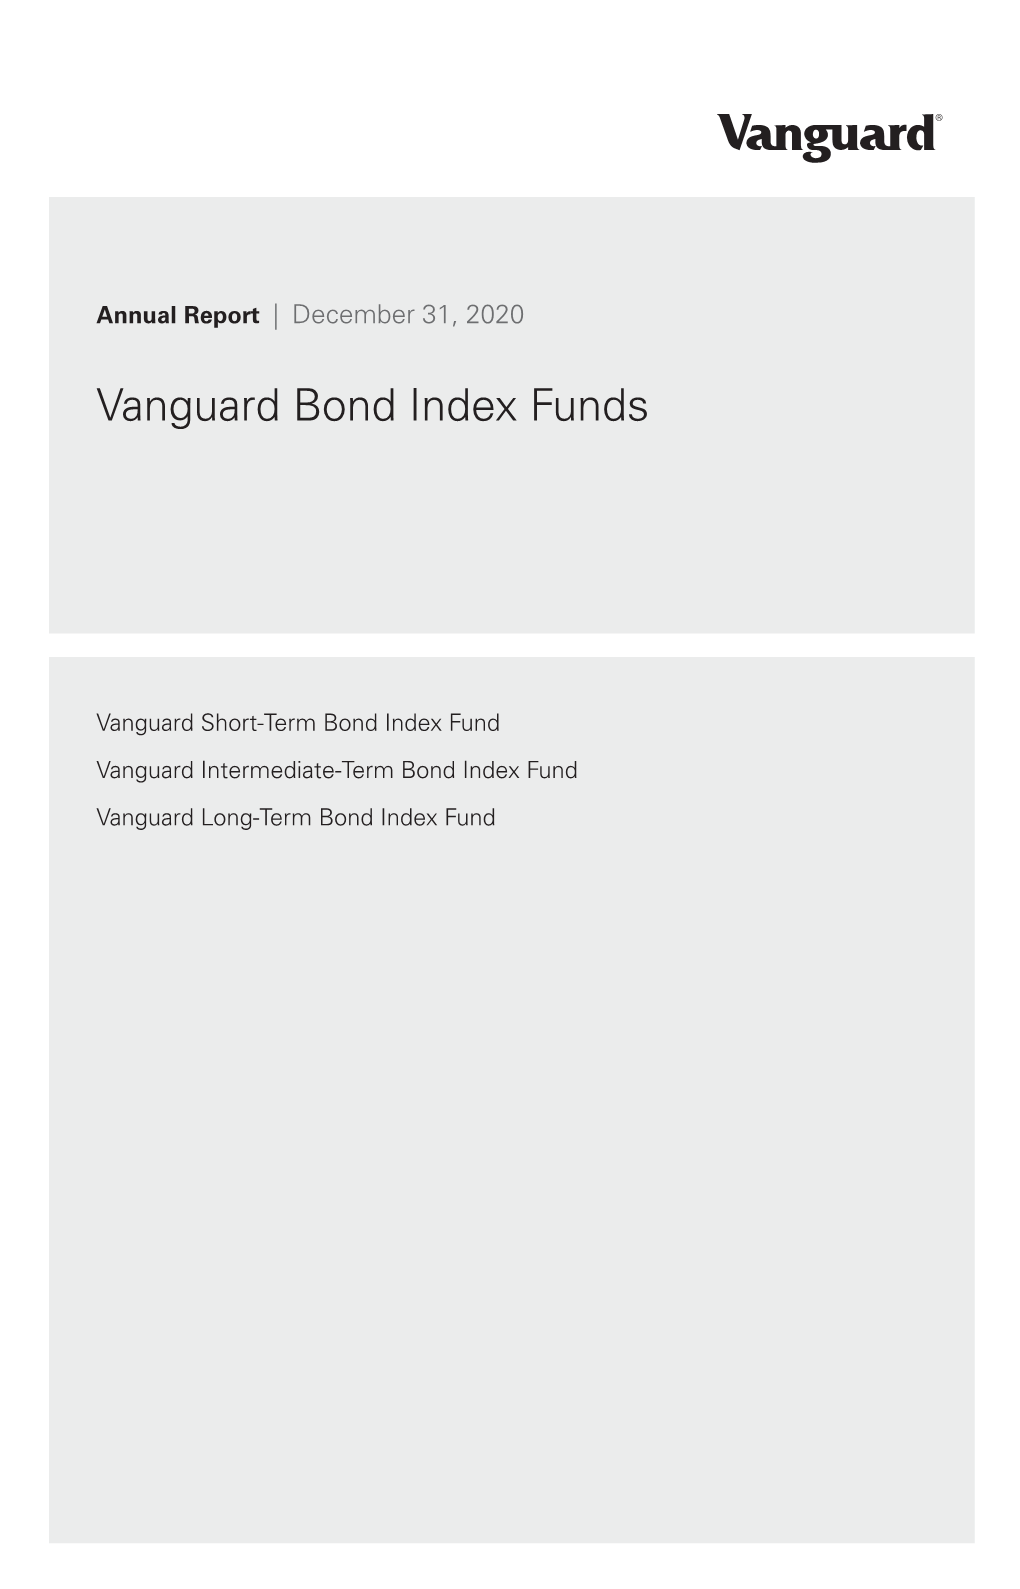 Vanguard Bond Index Funds Annual Report December 31, 2020